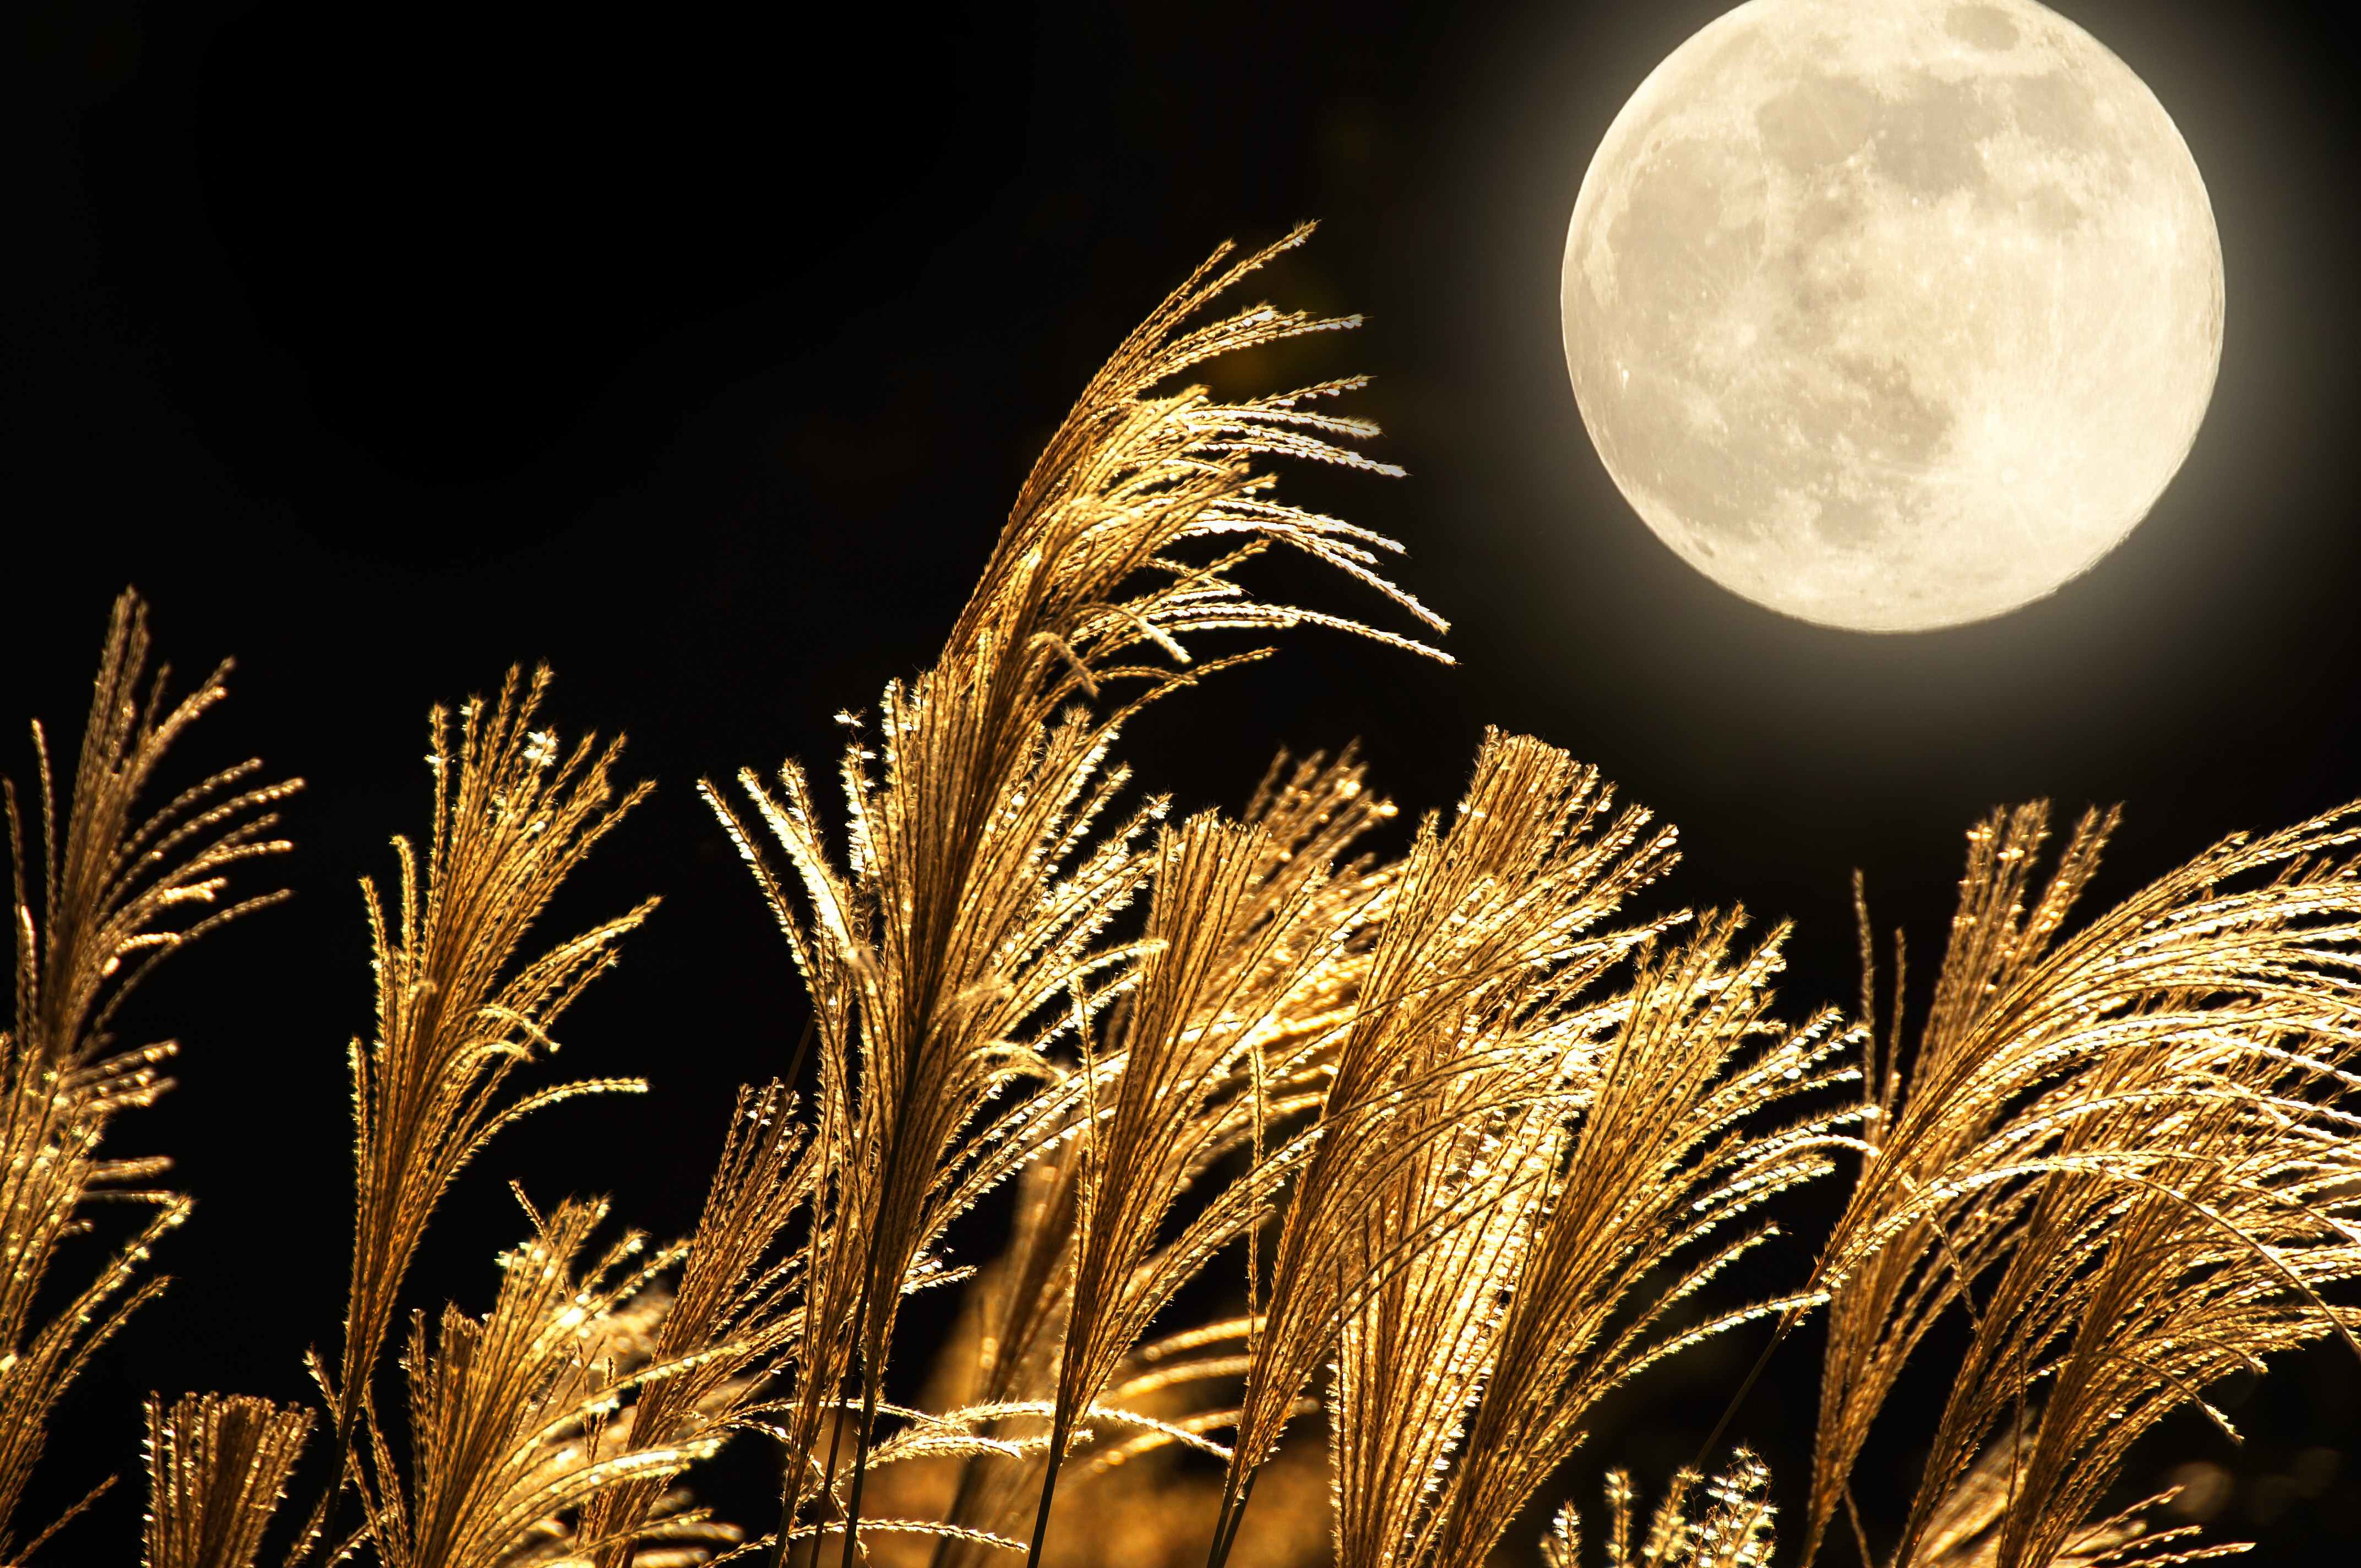 The Full Harvest Moon Rises Friday the 13th! Old Farmer's Almanac